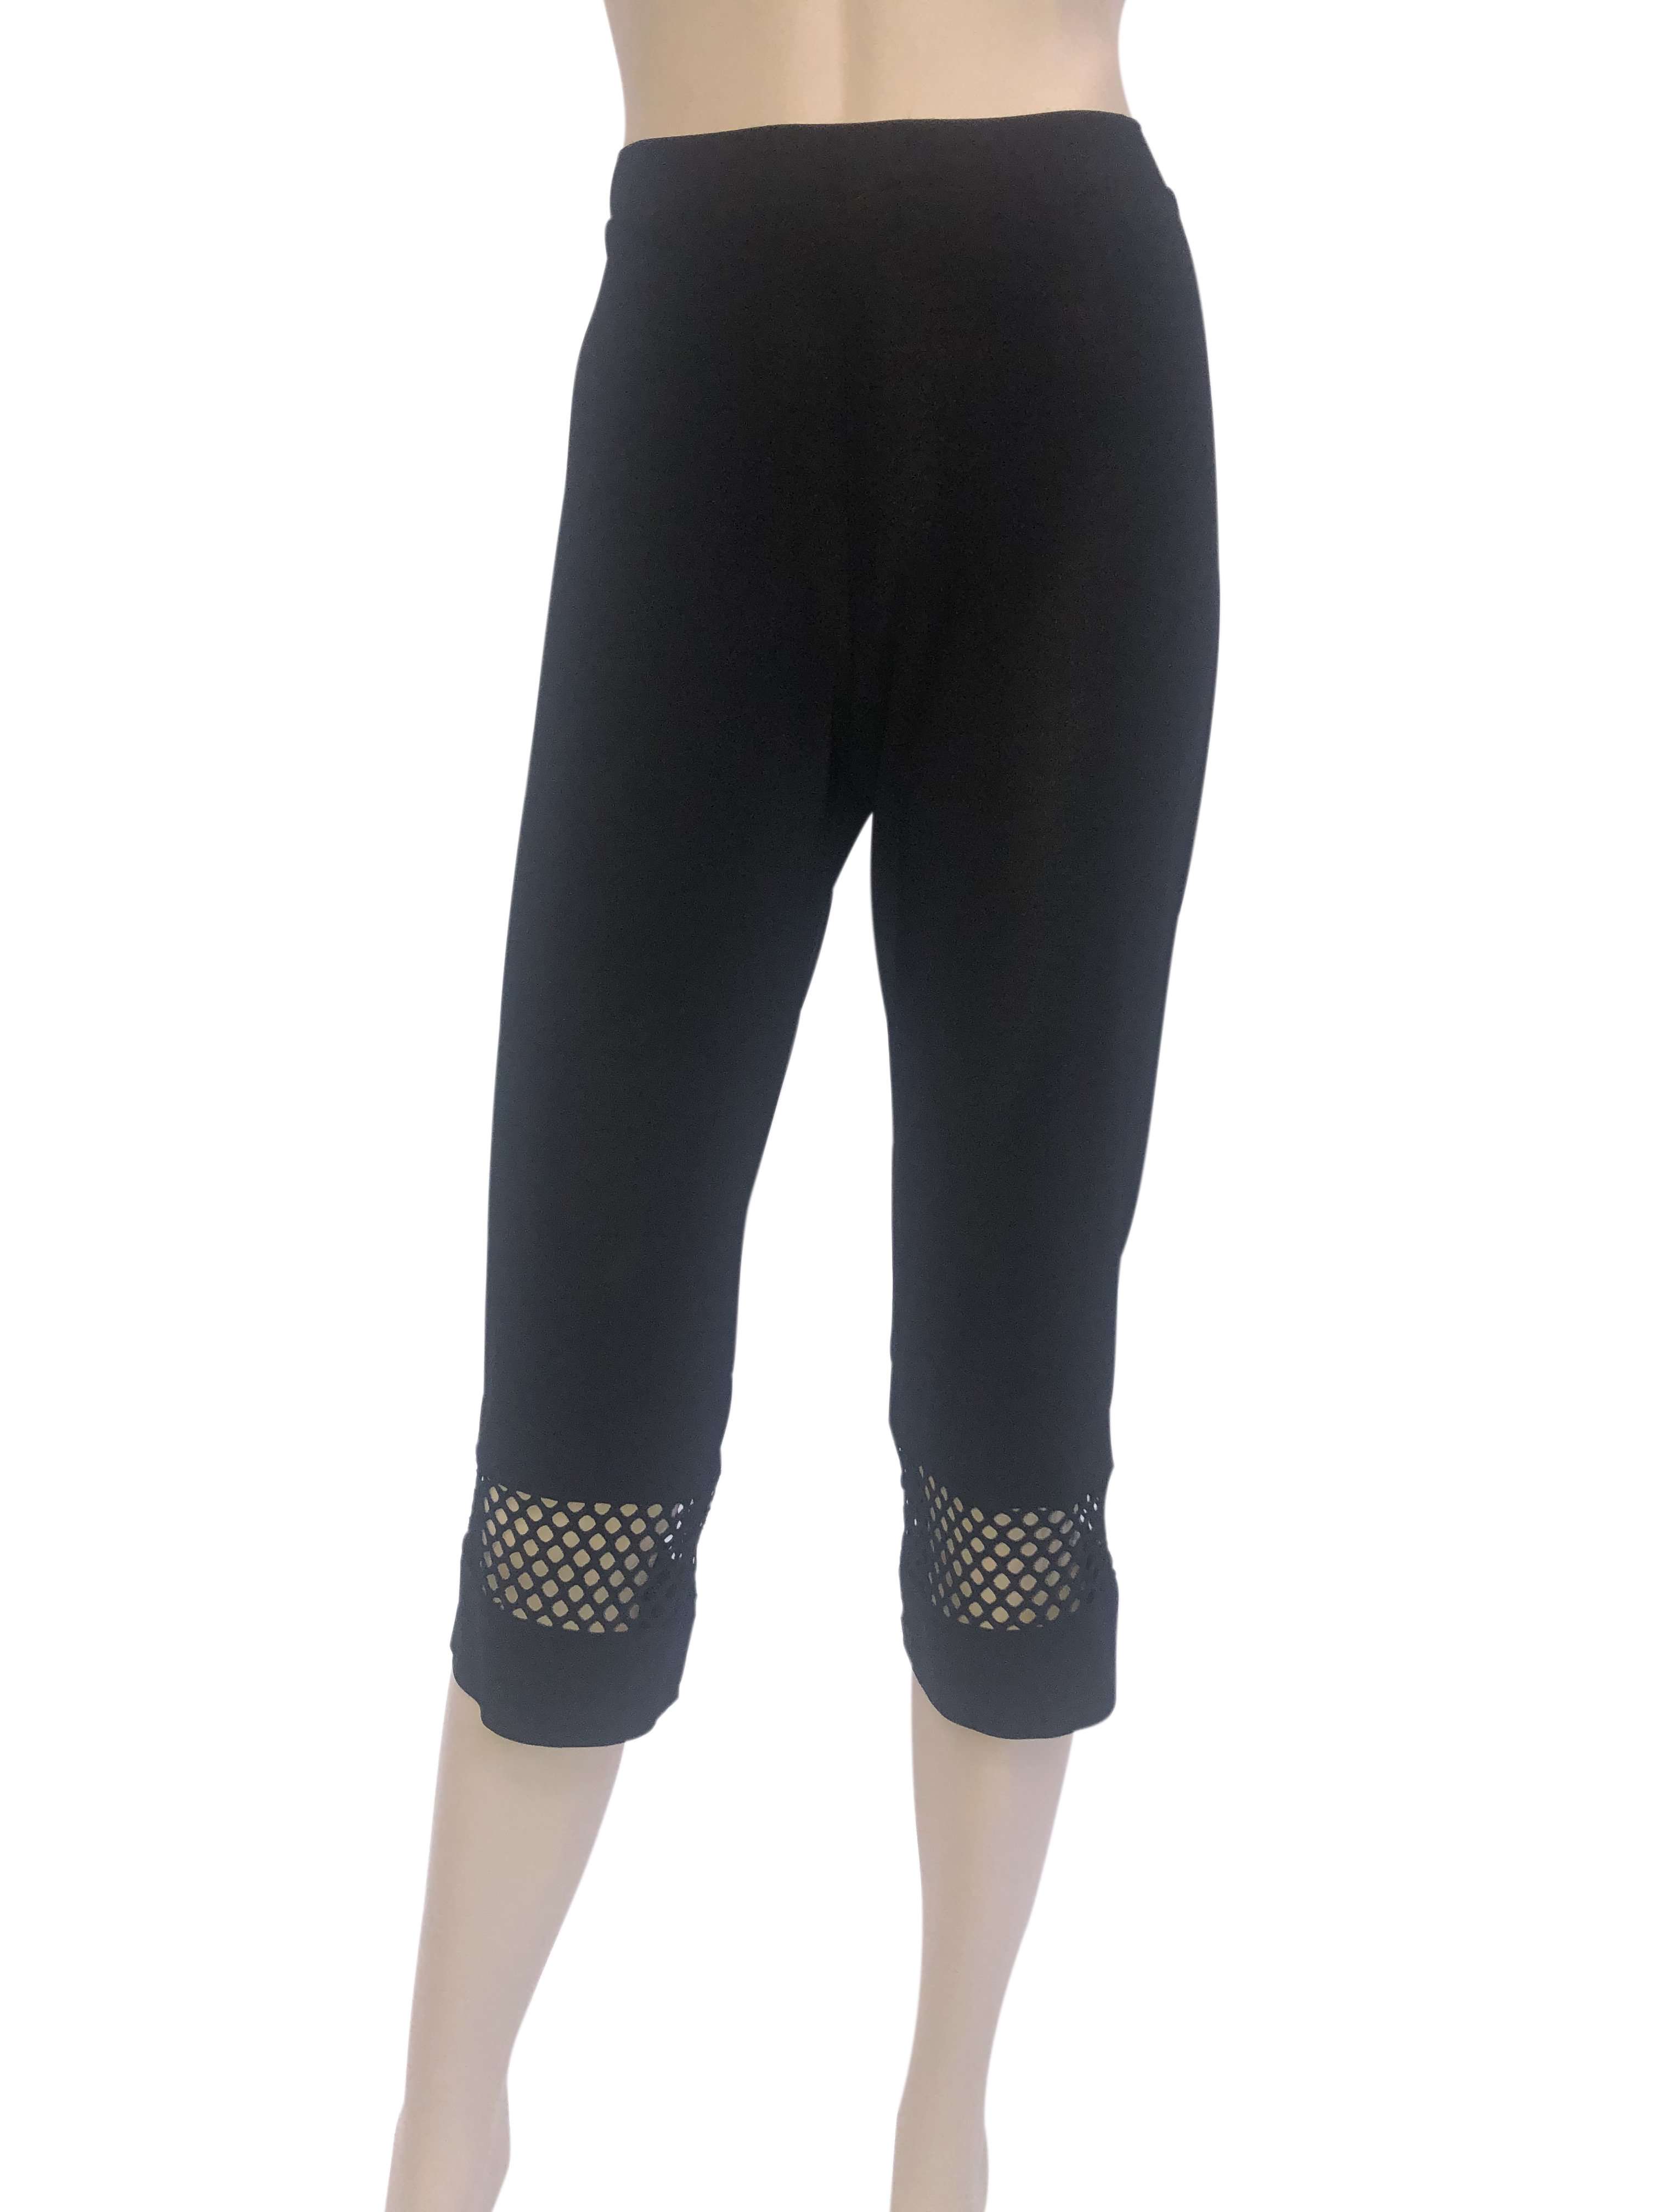 Women's Black Capri Pants | XL Sizes | On Sale | YM Style